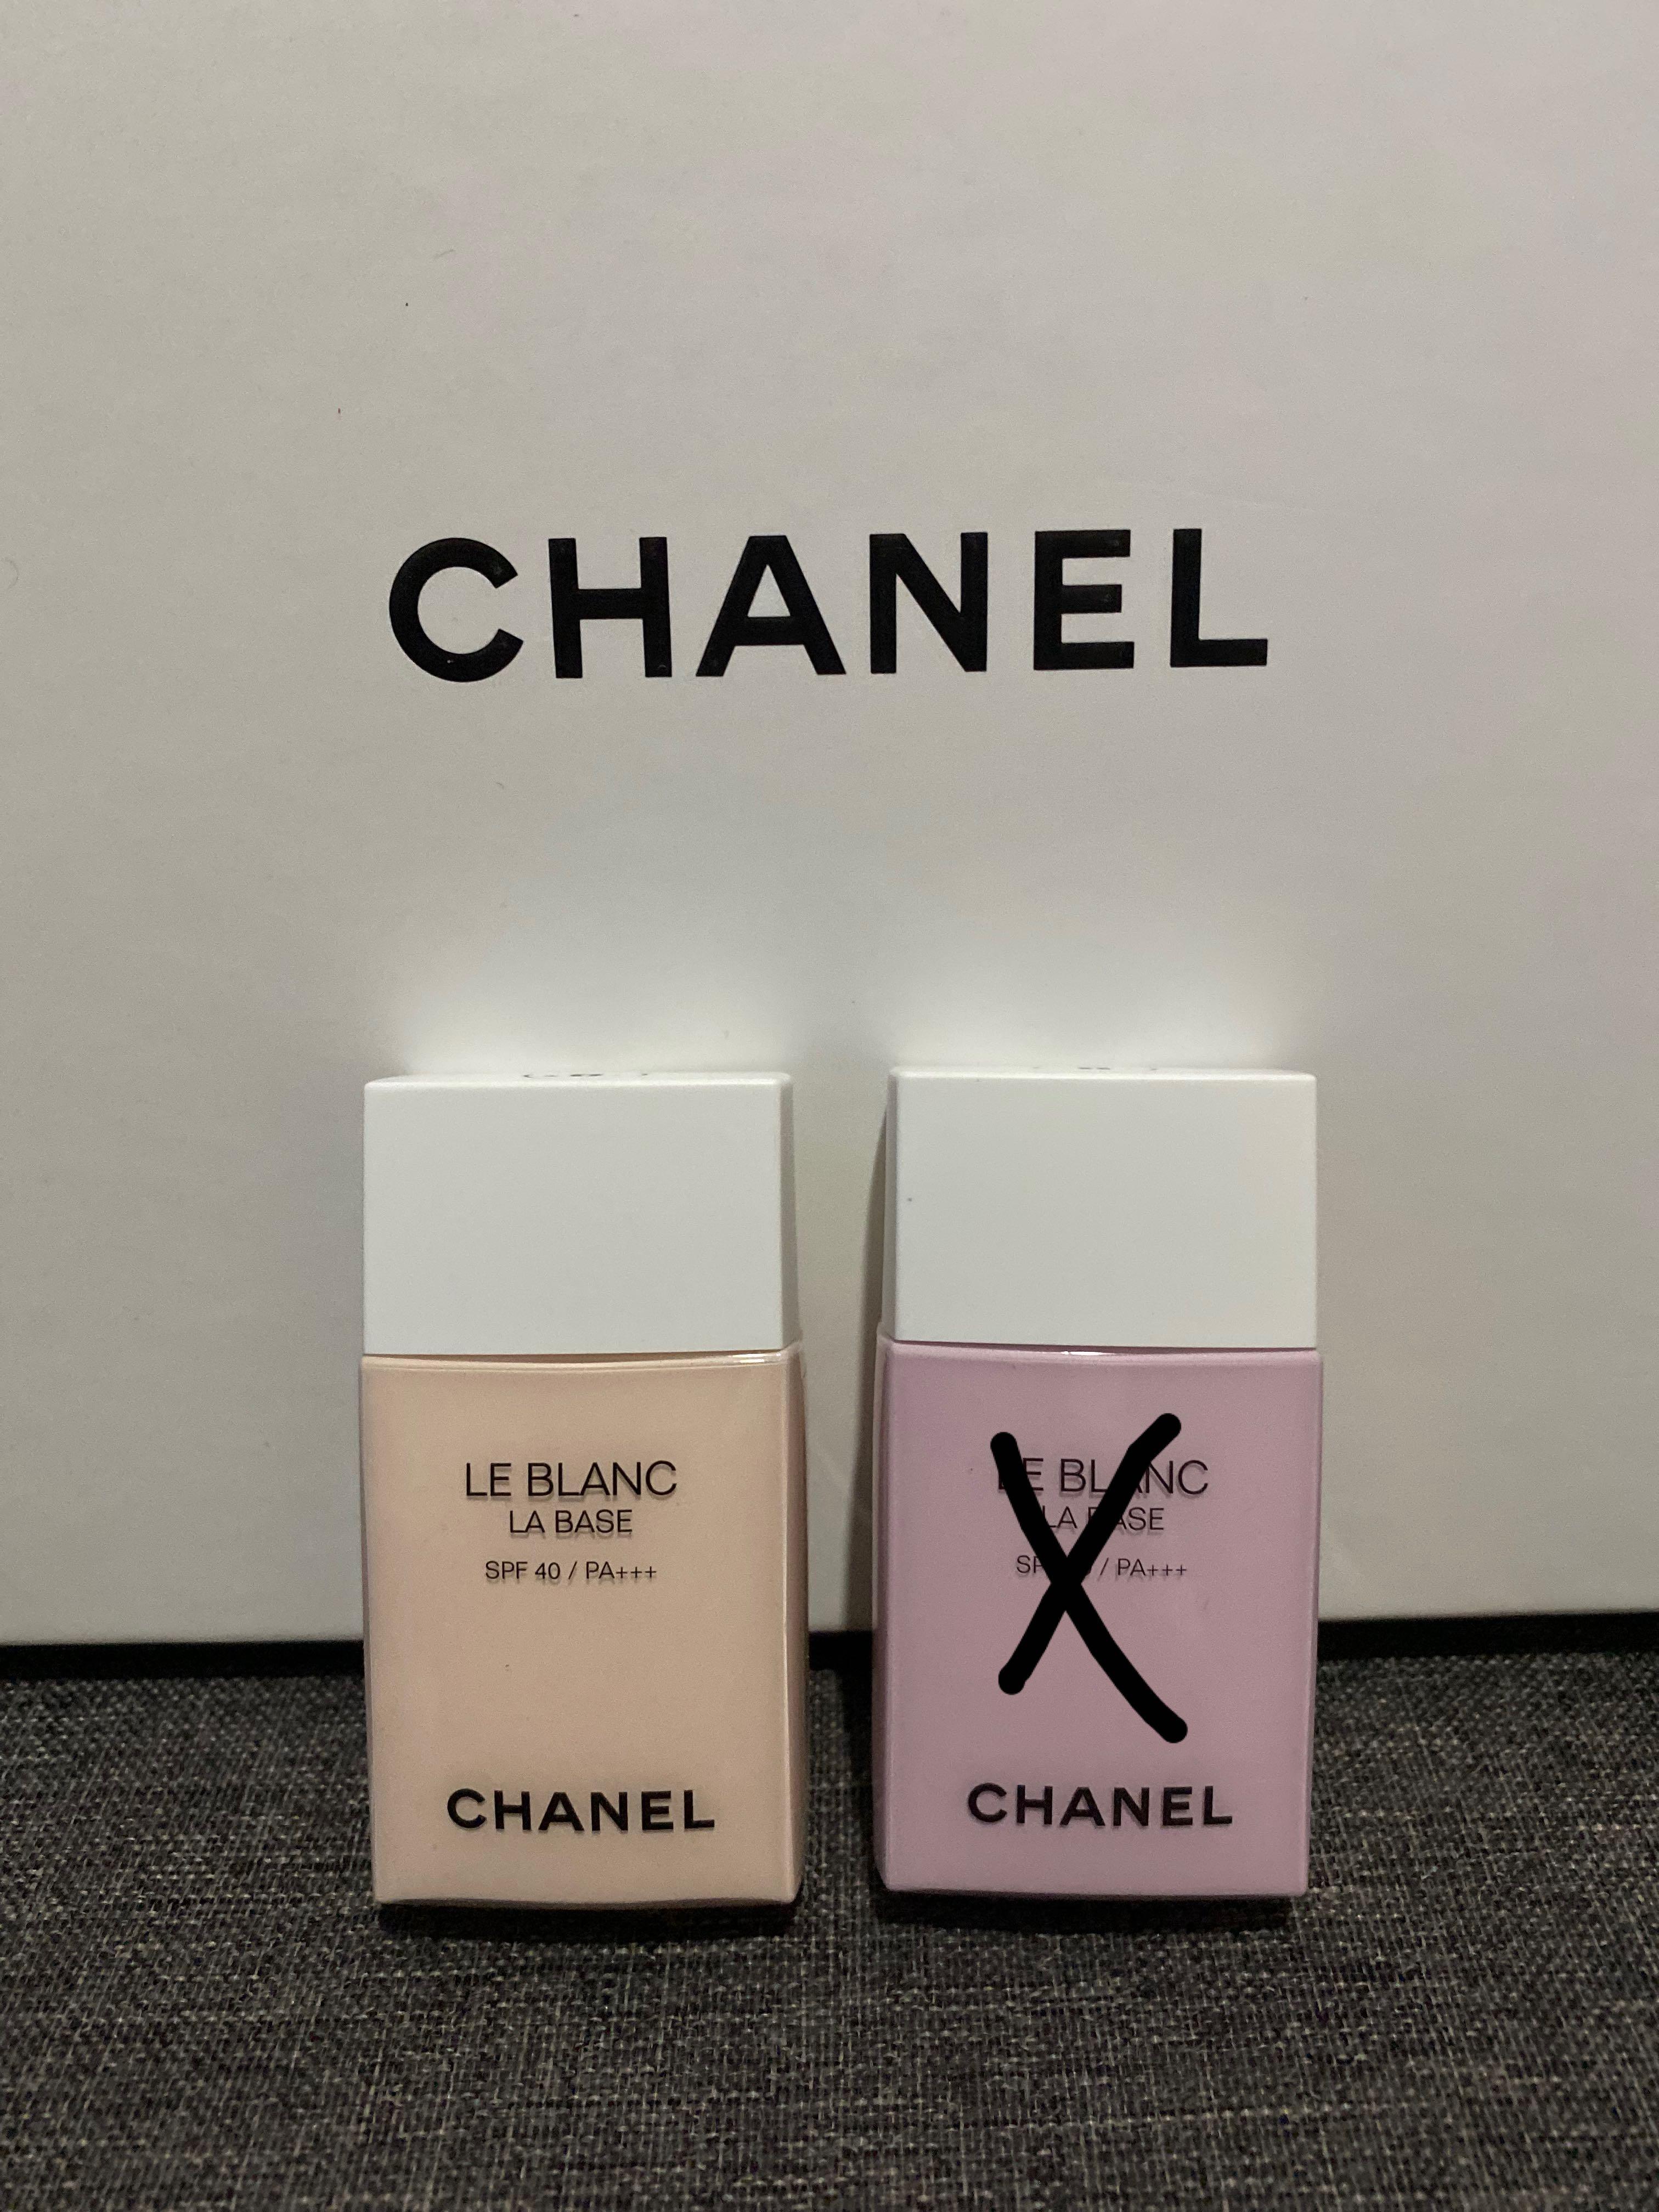 Chanel Le Blanc la base - Rosee, Beauty & Personal Care, Face